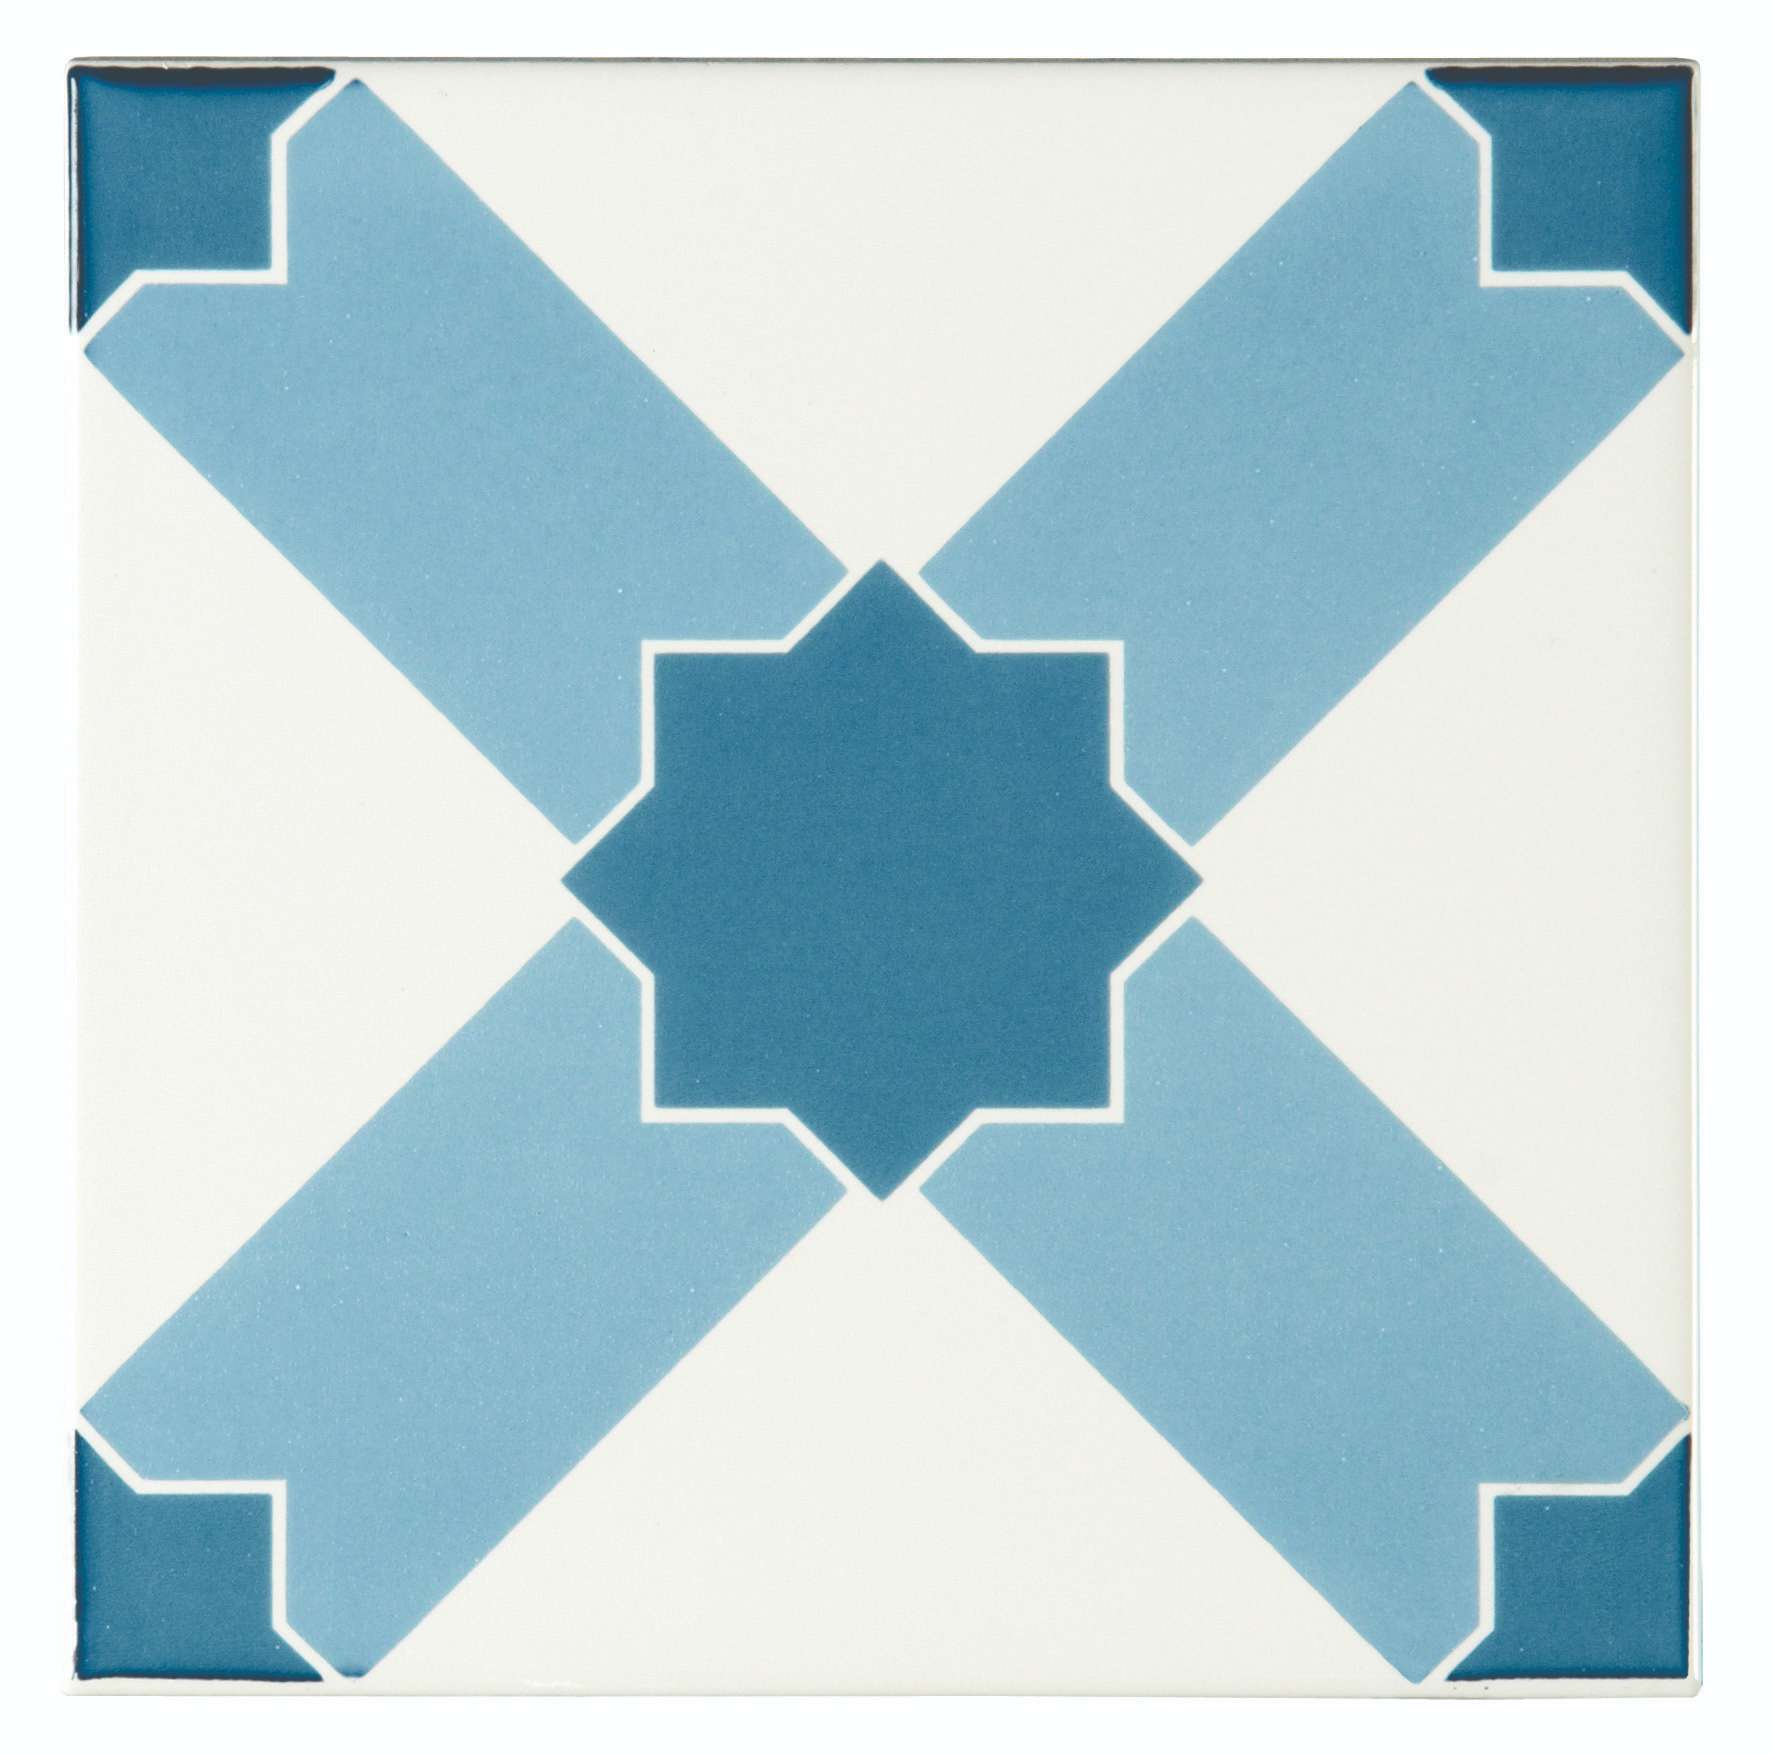 Original Style Odyssey Blue on Brilliant White Tile 15x15cm